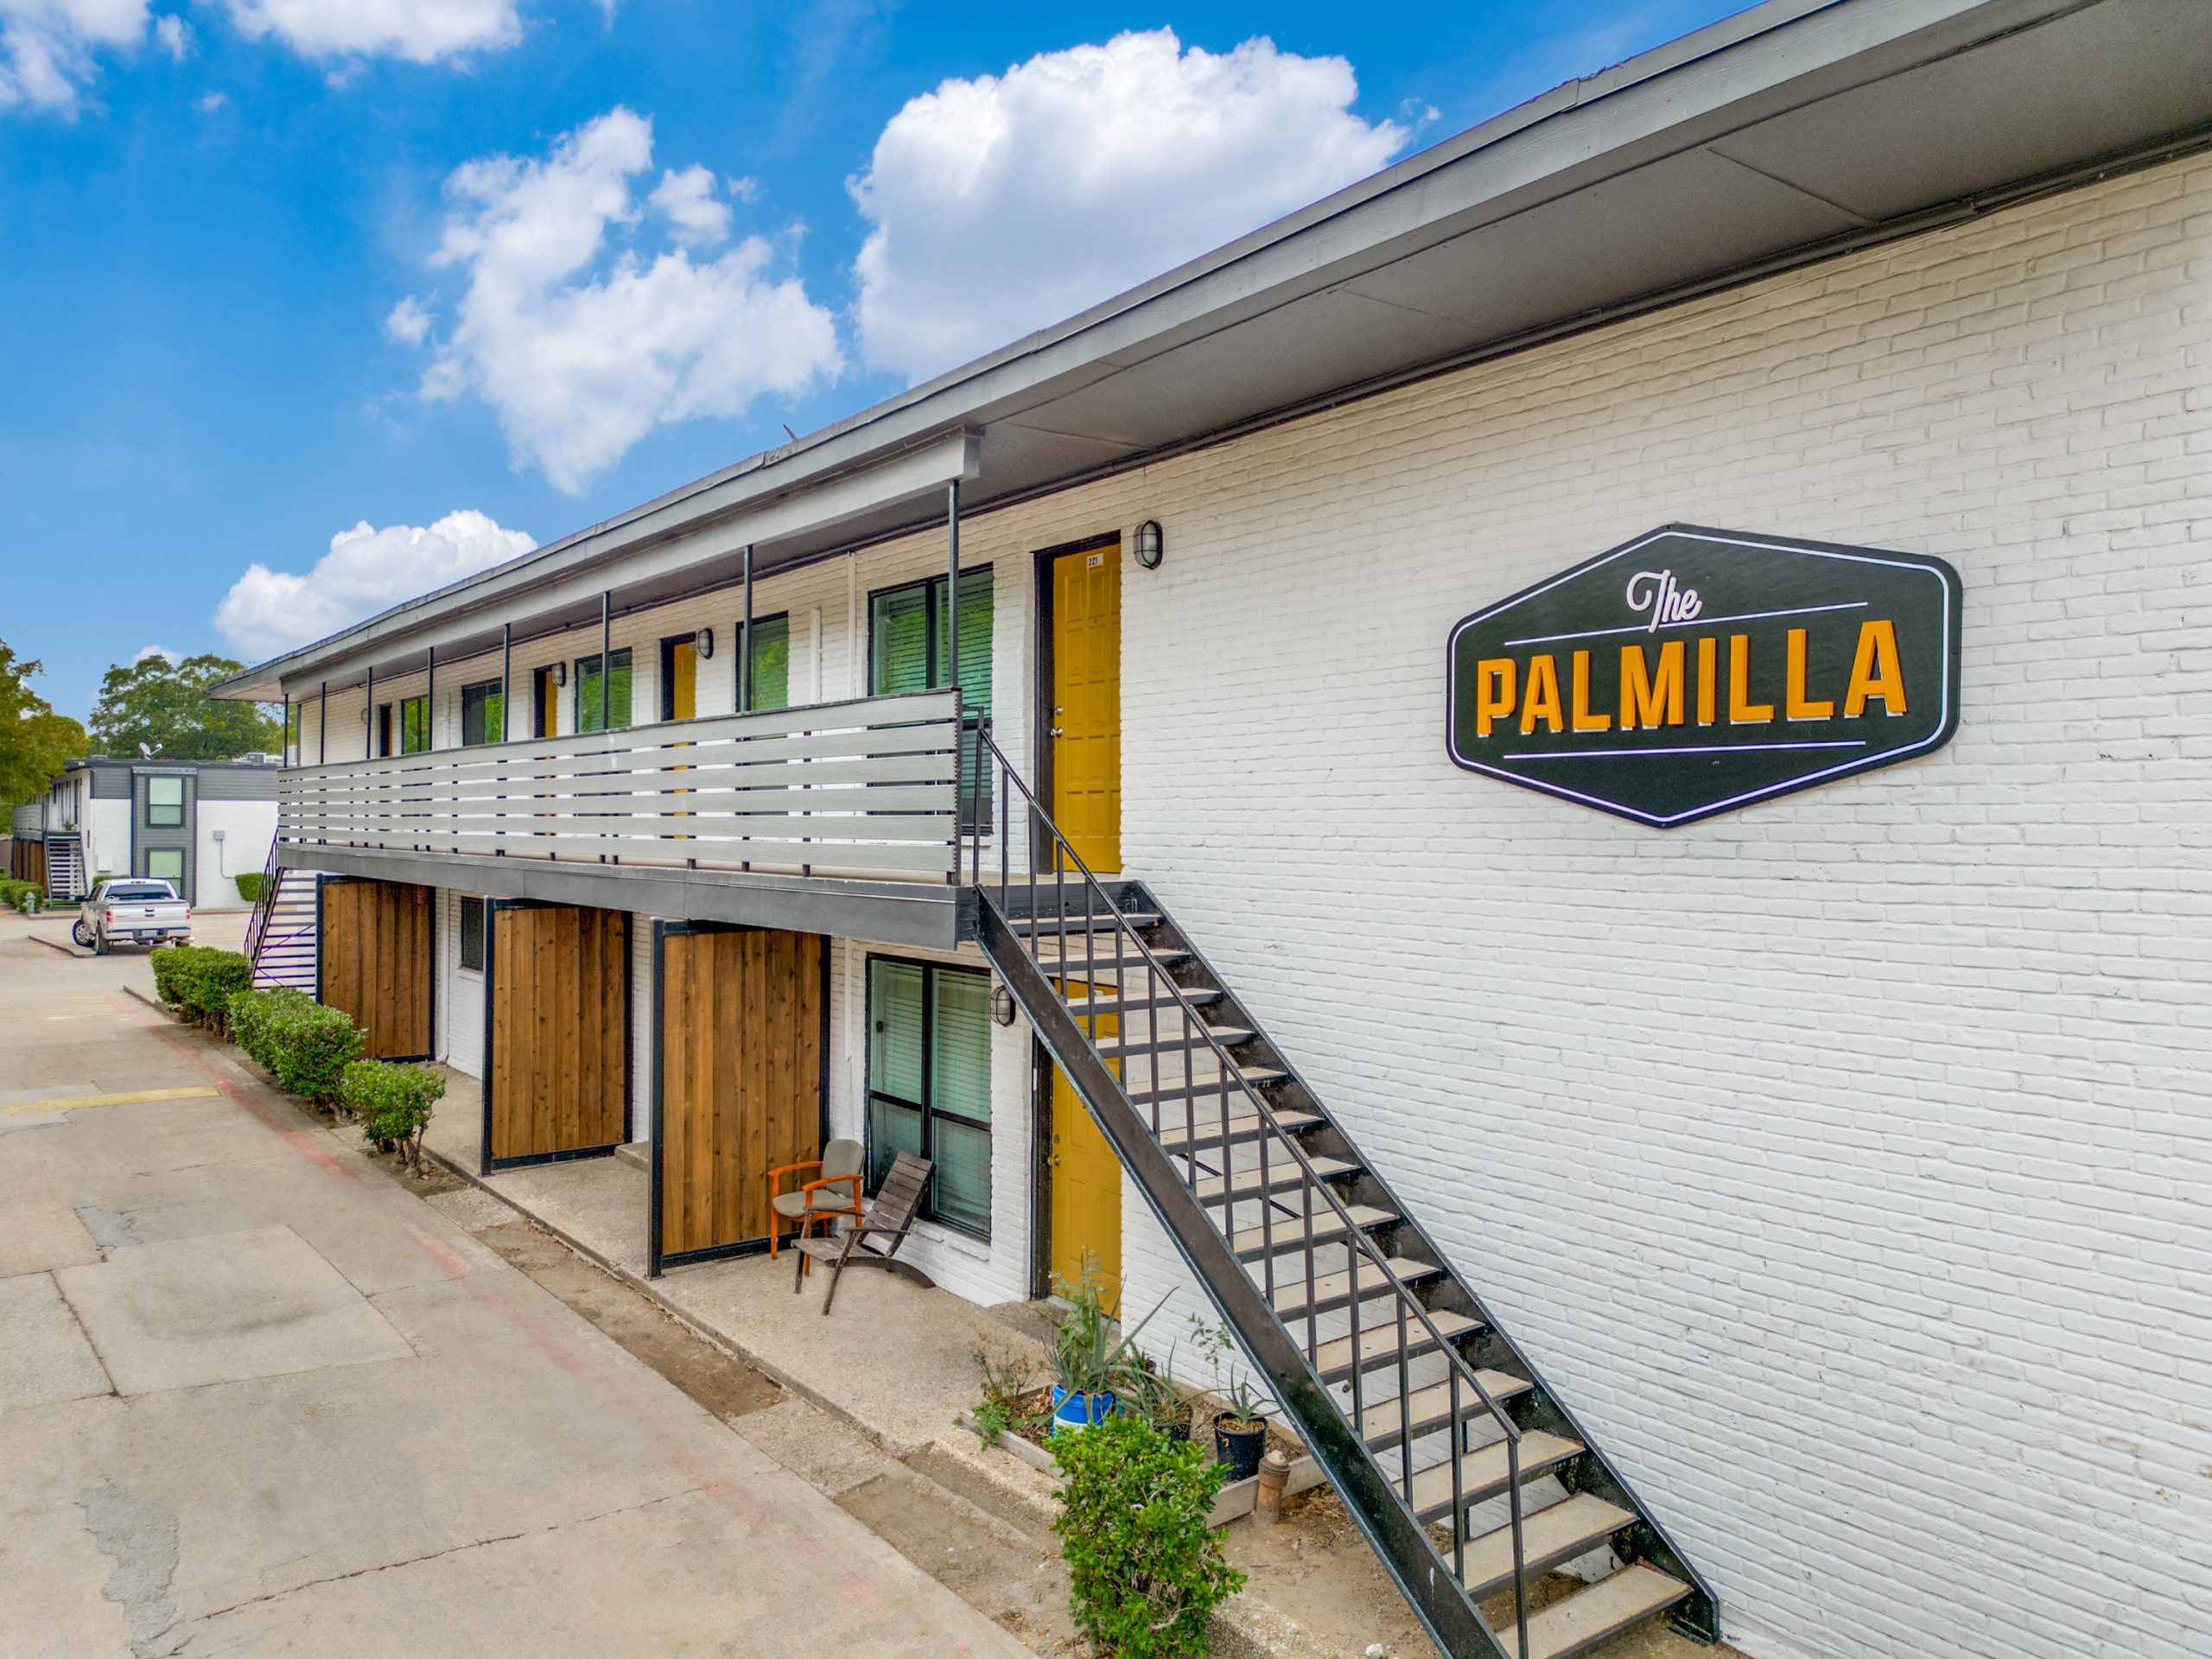 palmilla apartments in austin, texas at The Palmilla